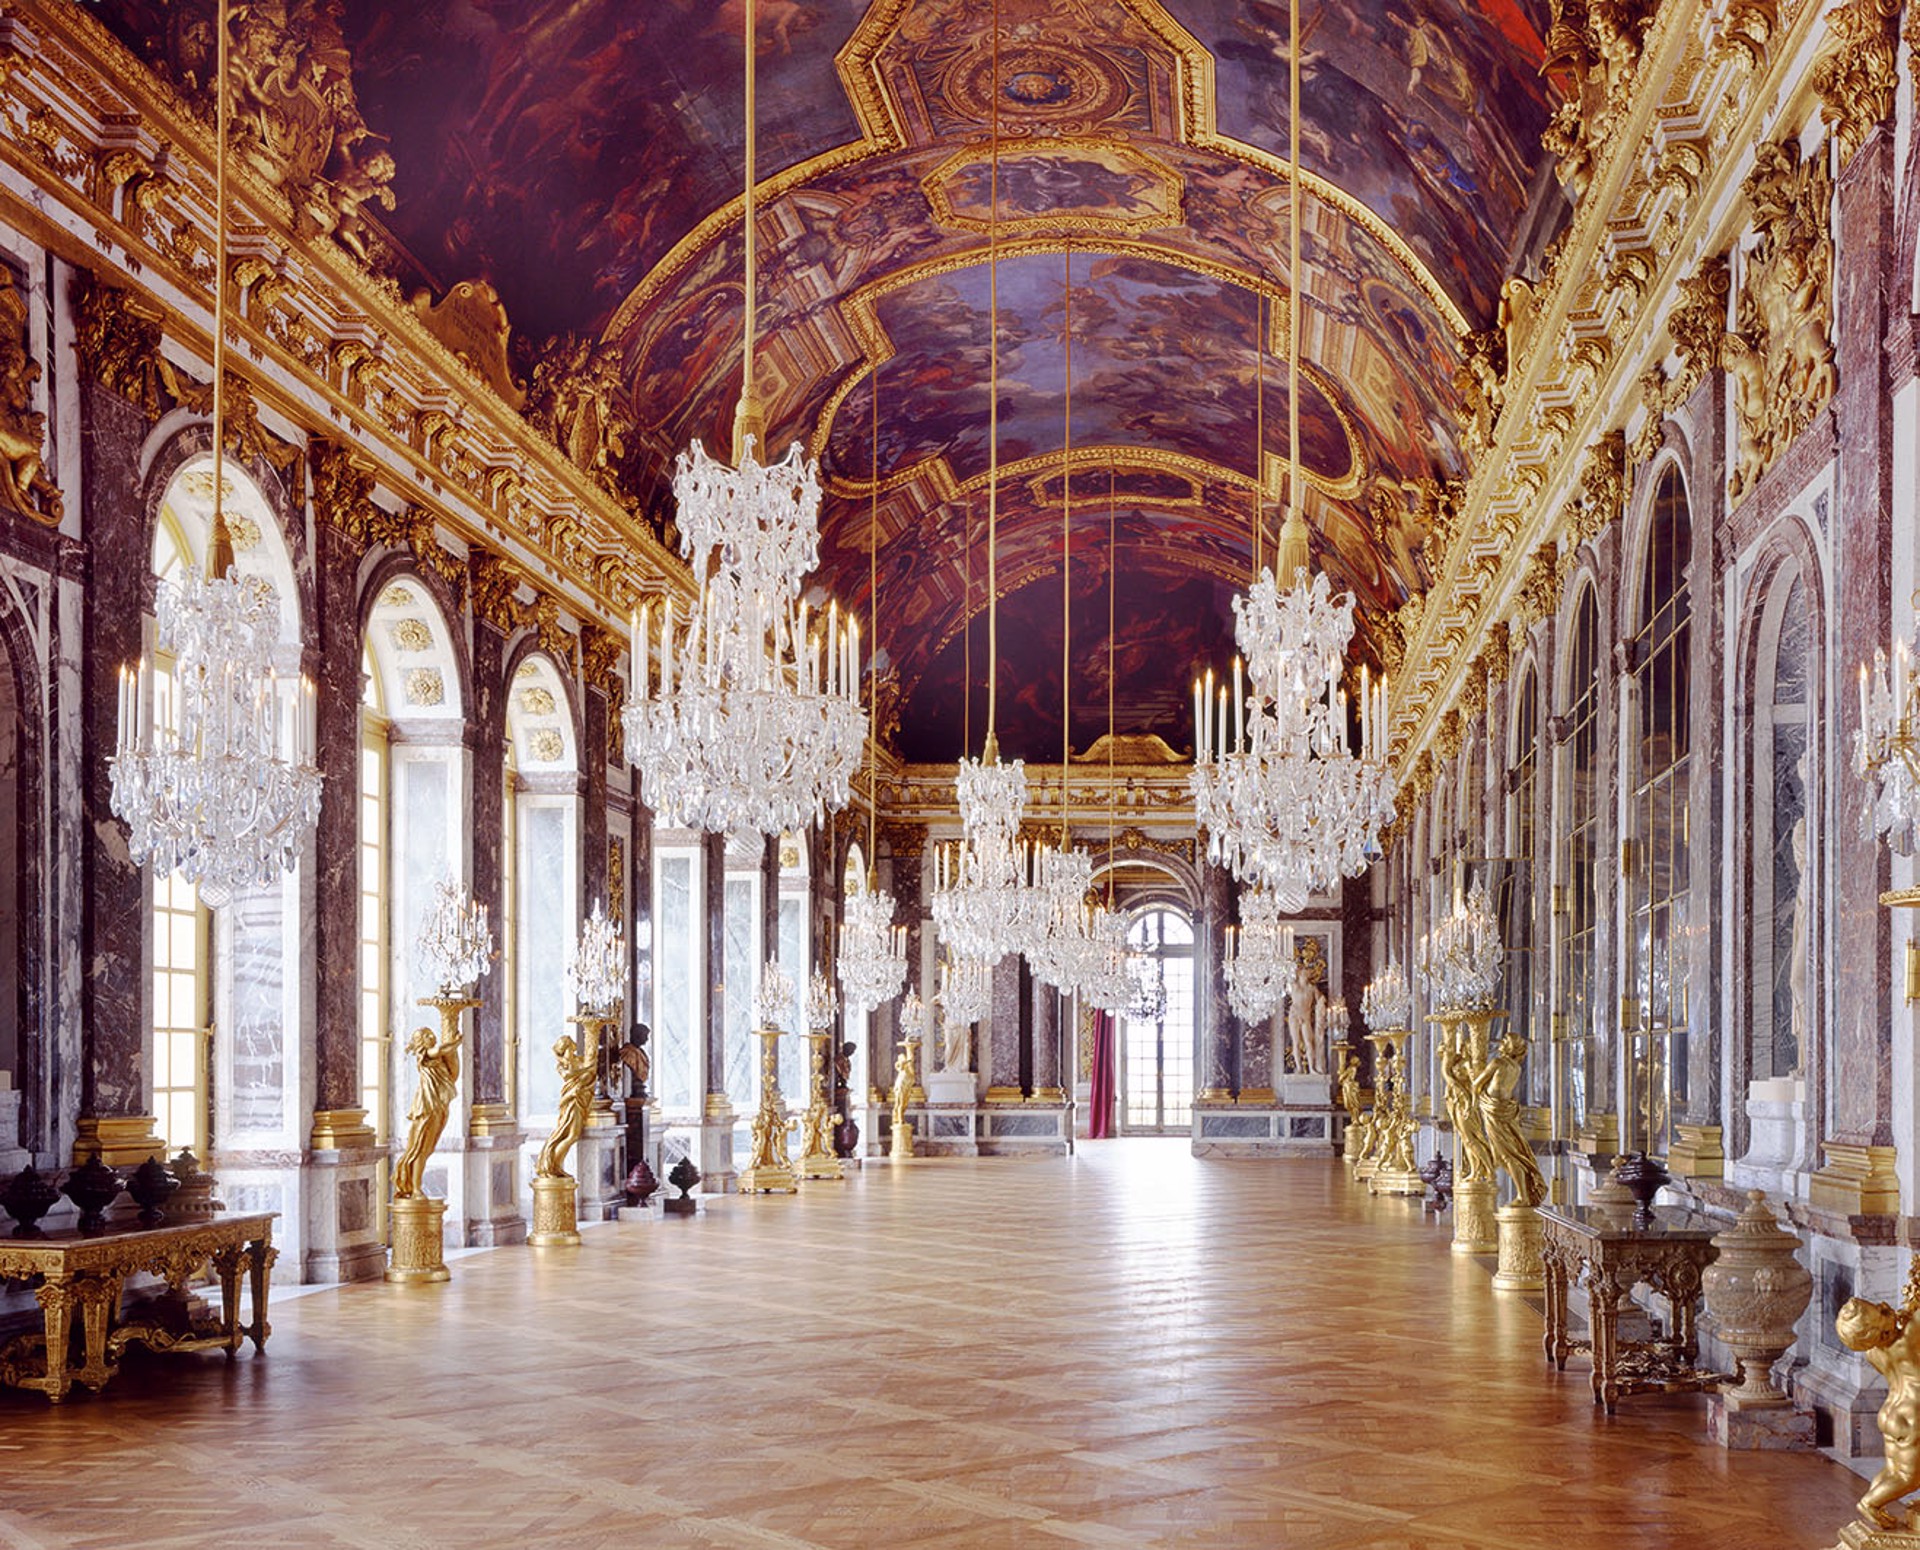 Galerie des Glaces III, Chateau de Versailles. France. by Reinhard Gorner